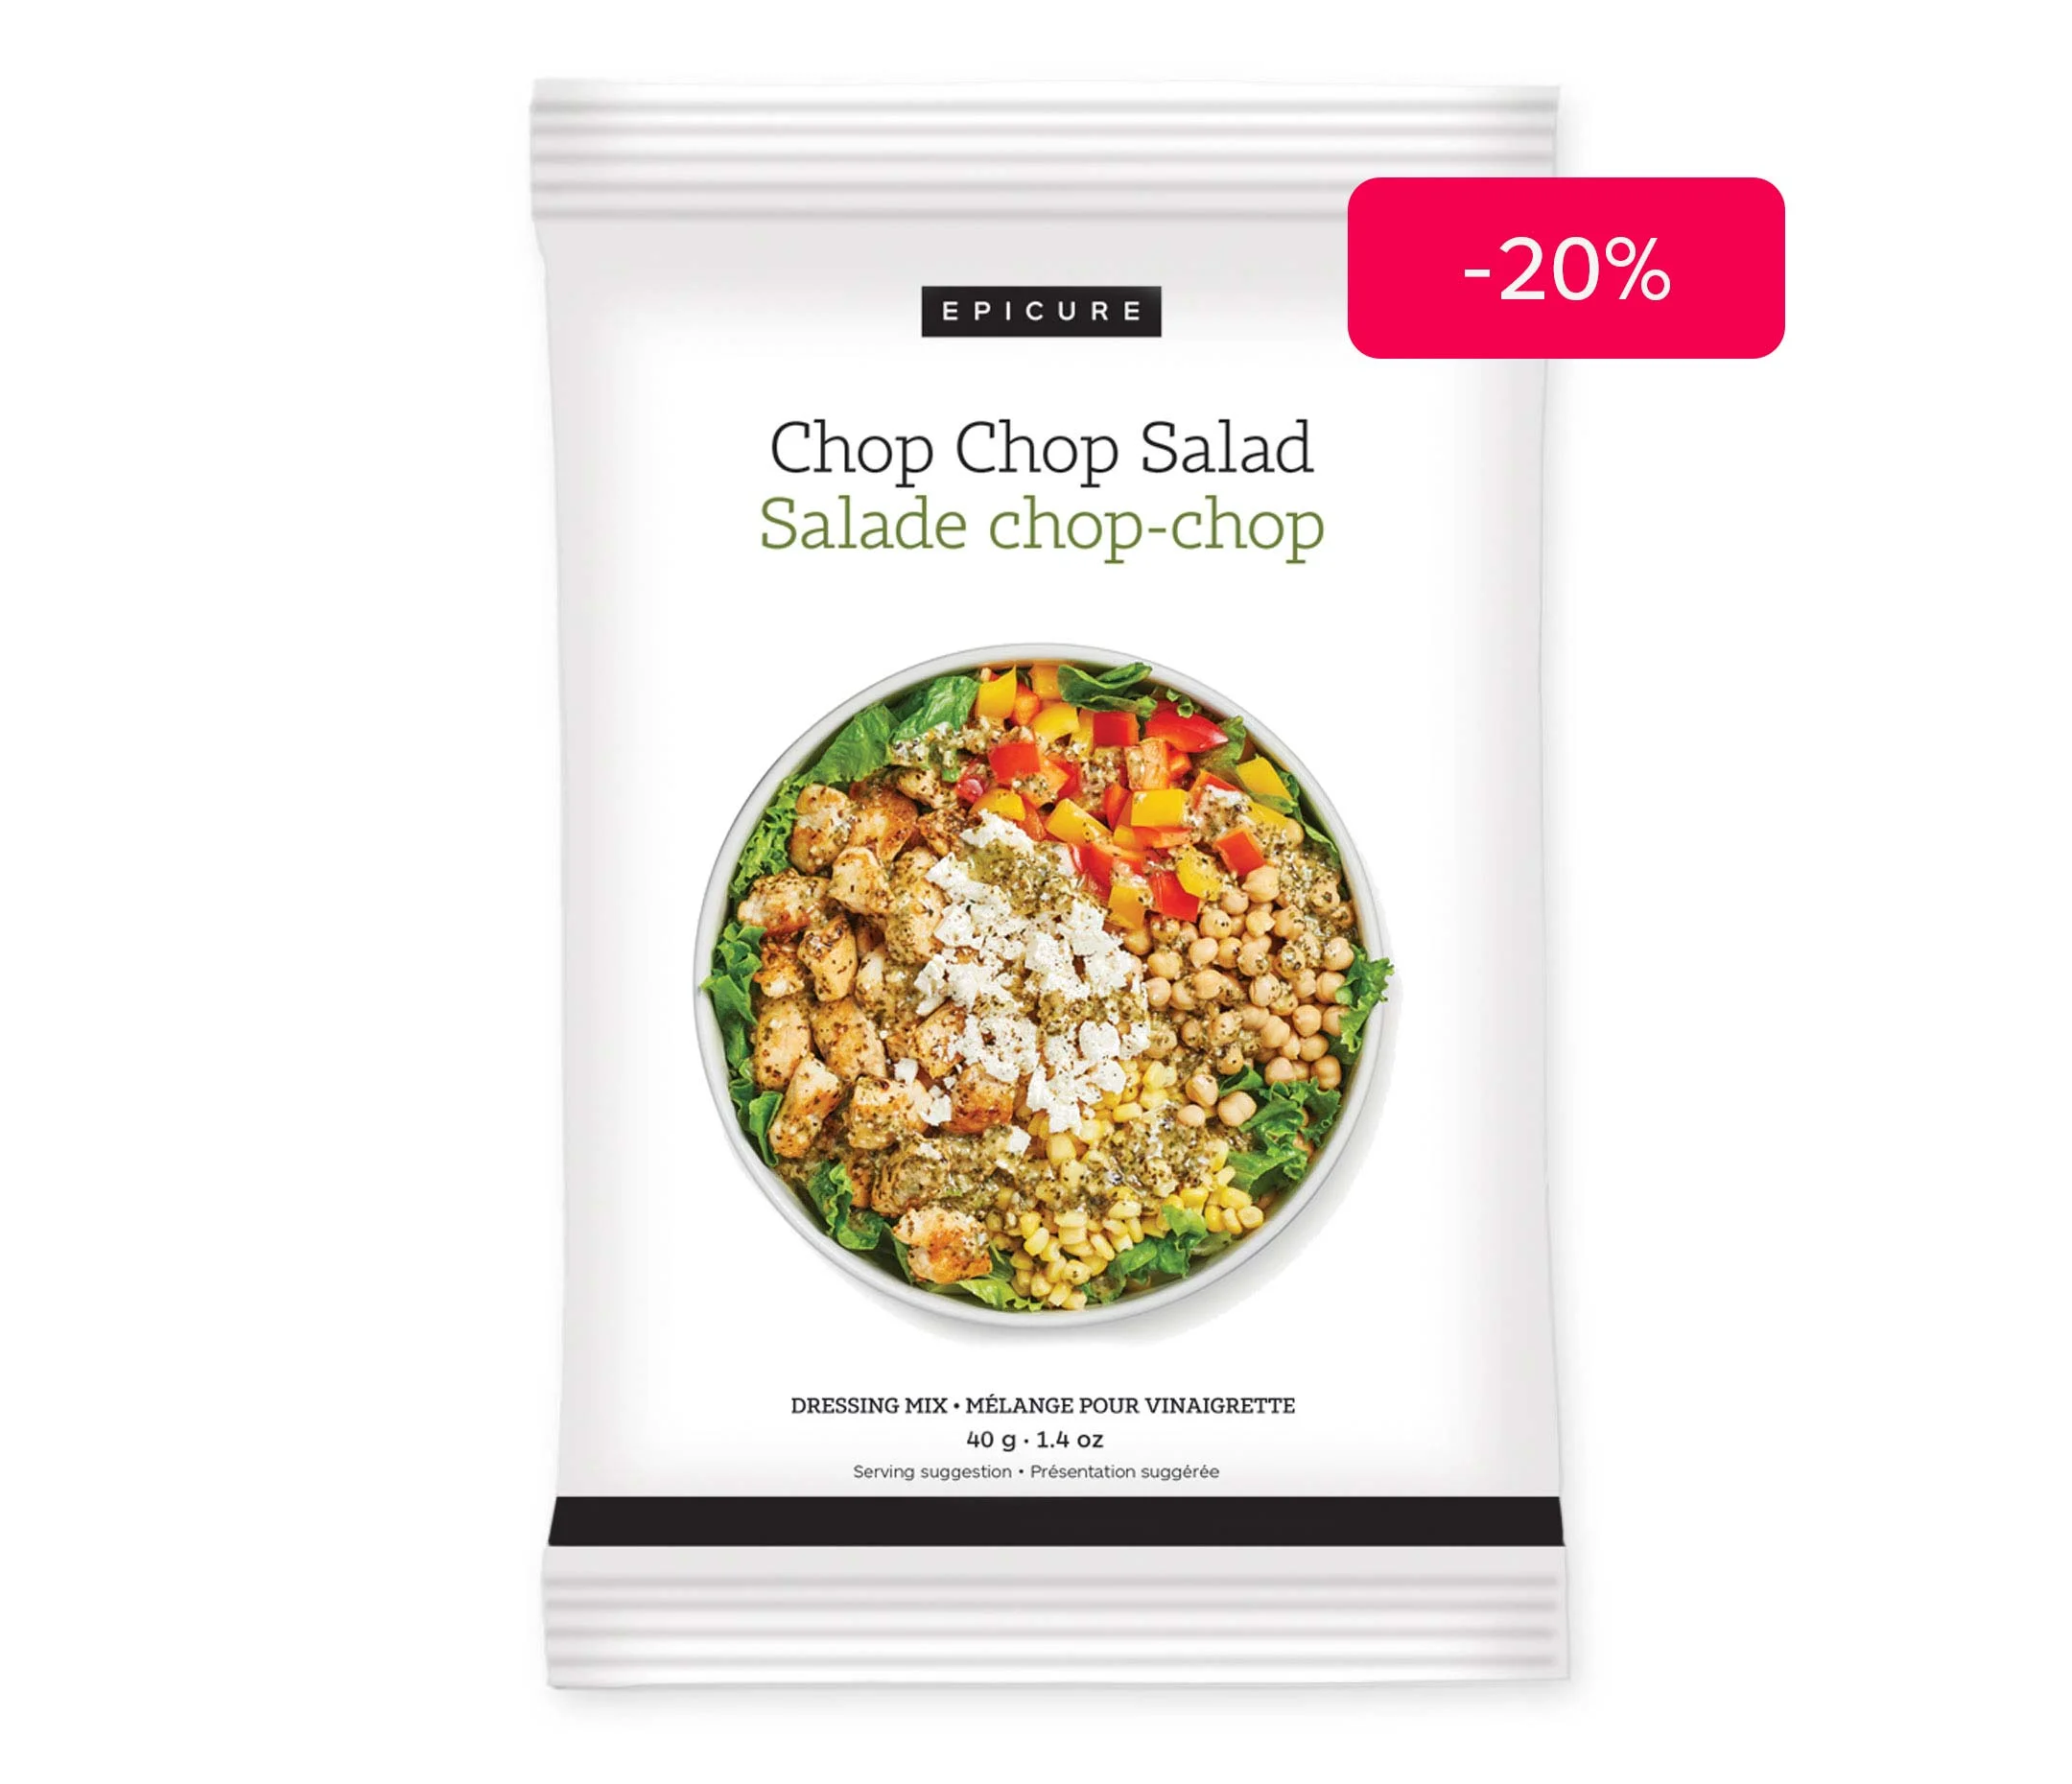 Chop Chop Salad Dressing Mix (Pack of 3)
